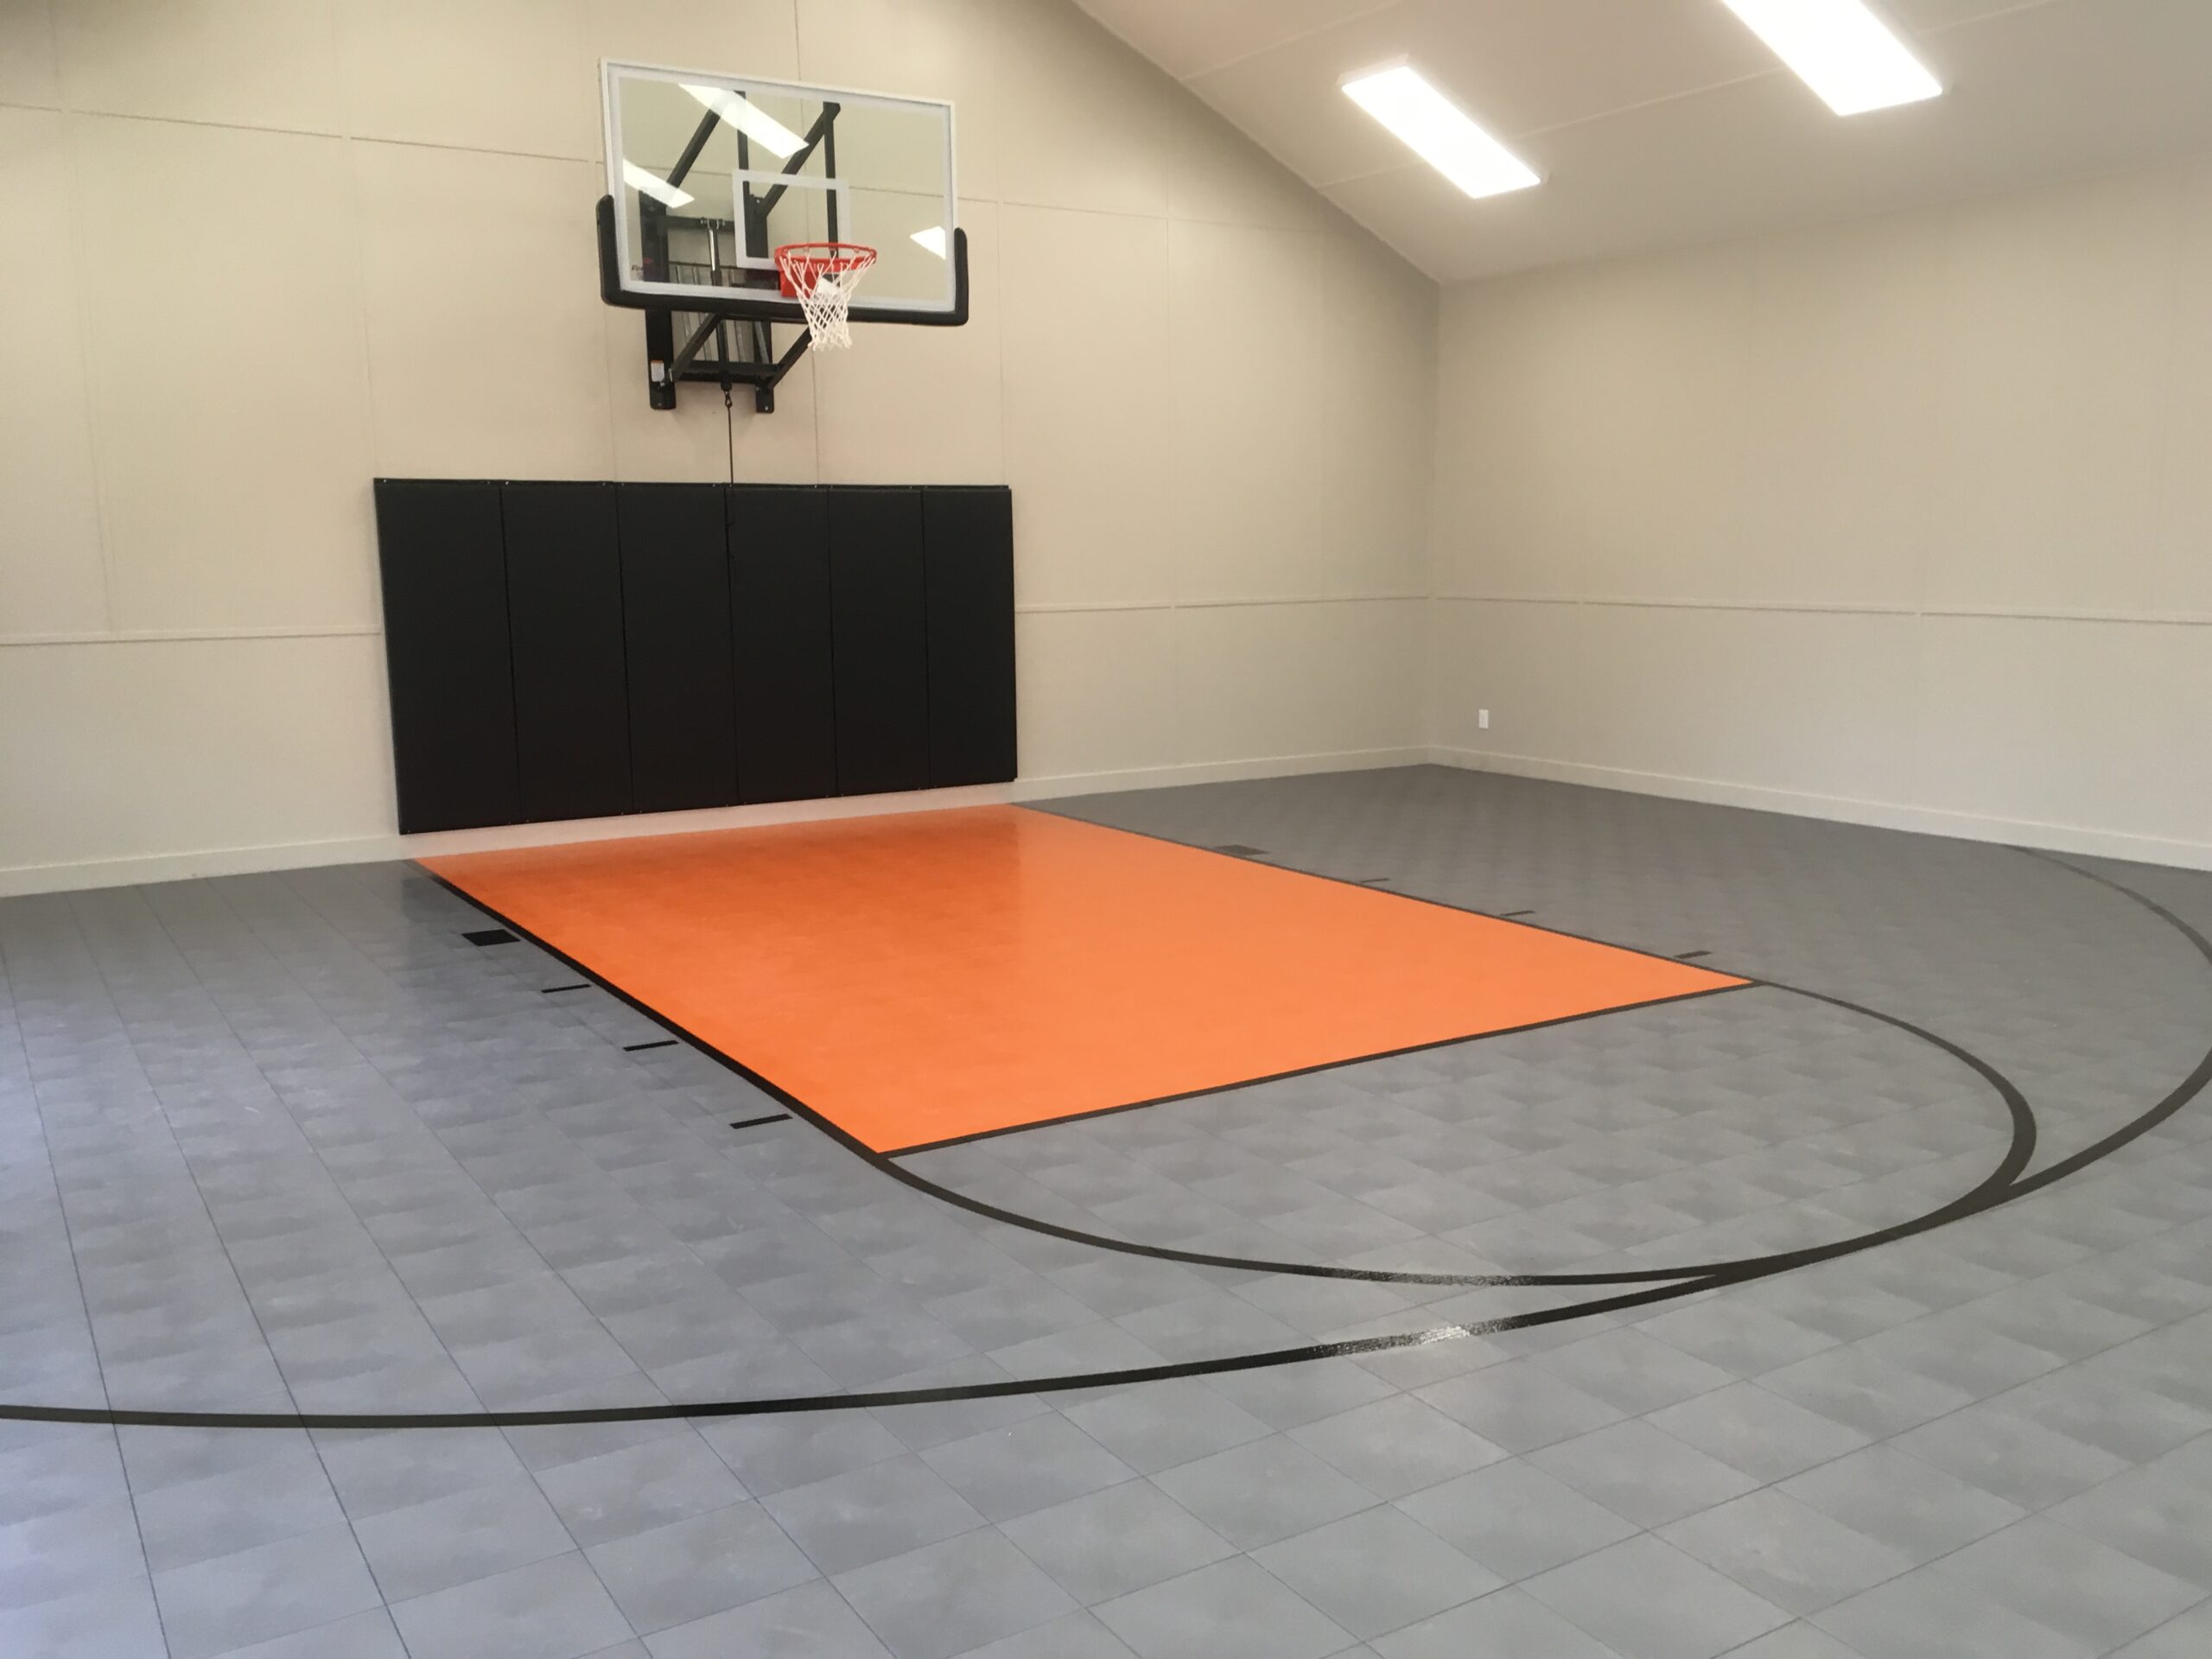 Half Court Indoor Basketball Court Cost prntbl